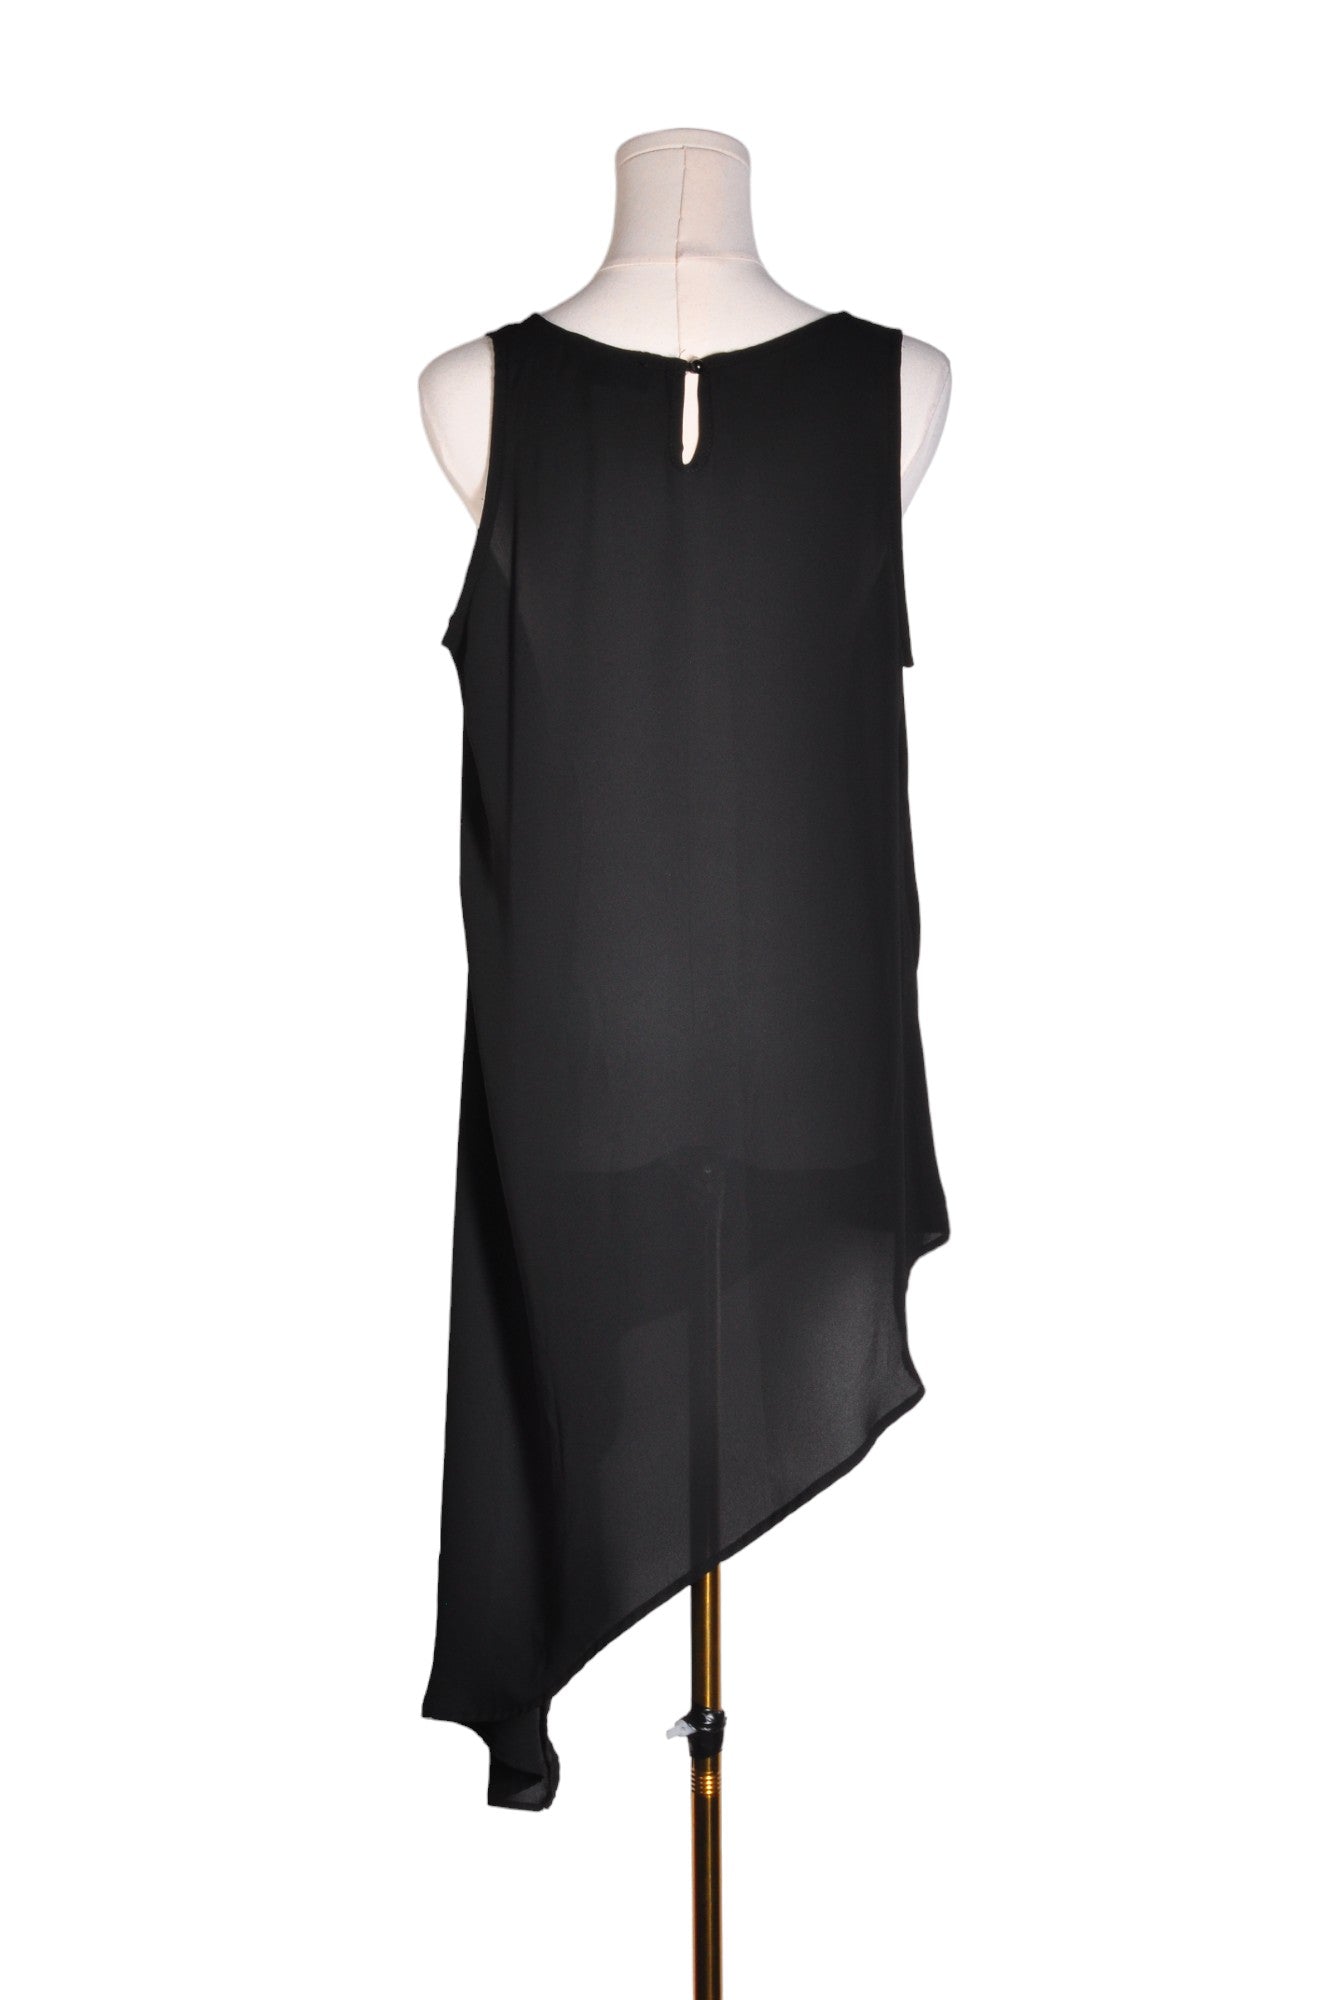 MERCER & MADISON Women High Low Dresses Regular fit in Black - Size L | 15.5 $ KOOP